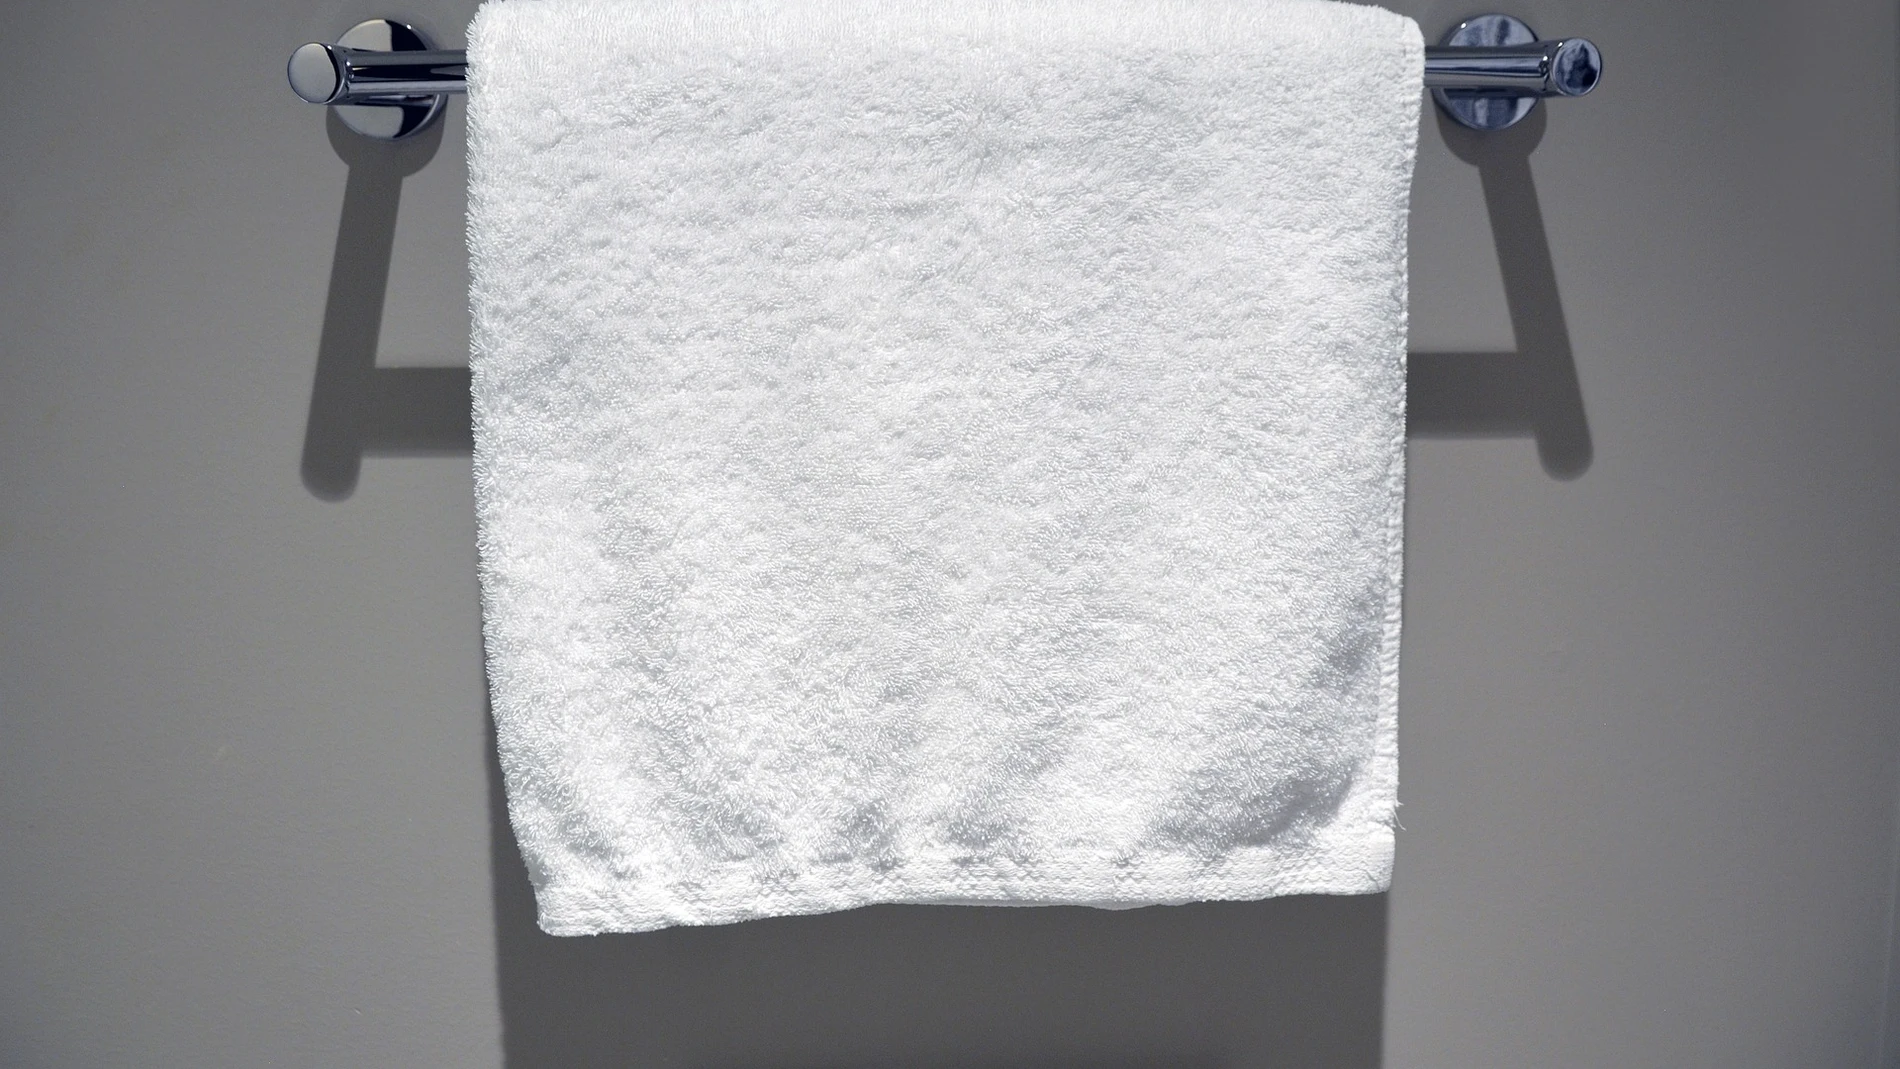 Спадающее полотенце. Полотенце висит. Полотенце махровое белый. Белое полотенце висит. Полотенца для ванны висячие.